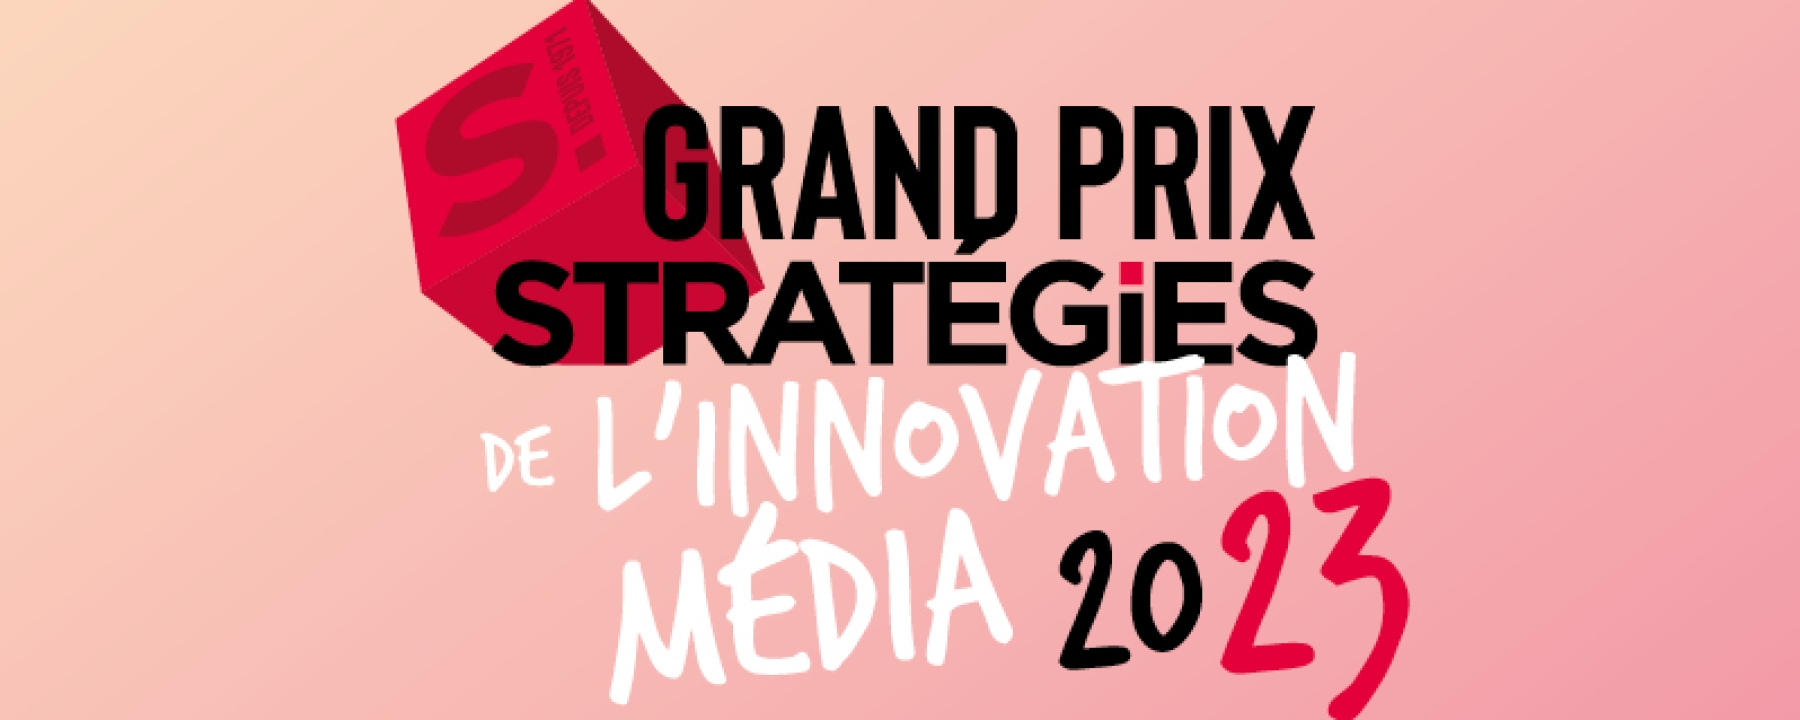 Grand Prix Stratégies de l'innovation media 2023